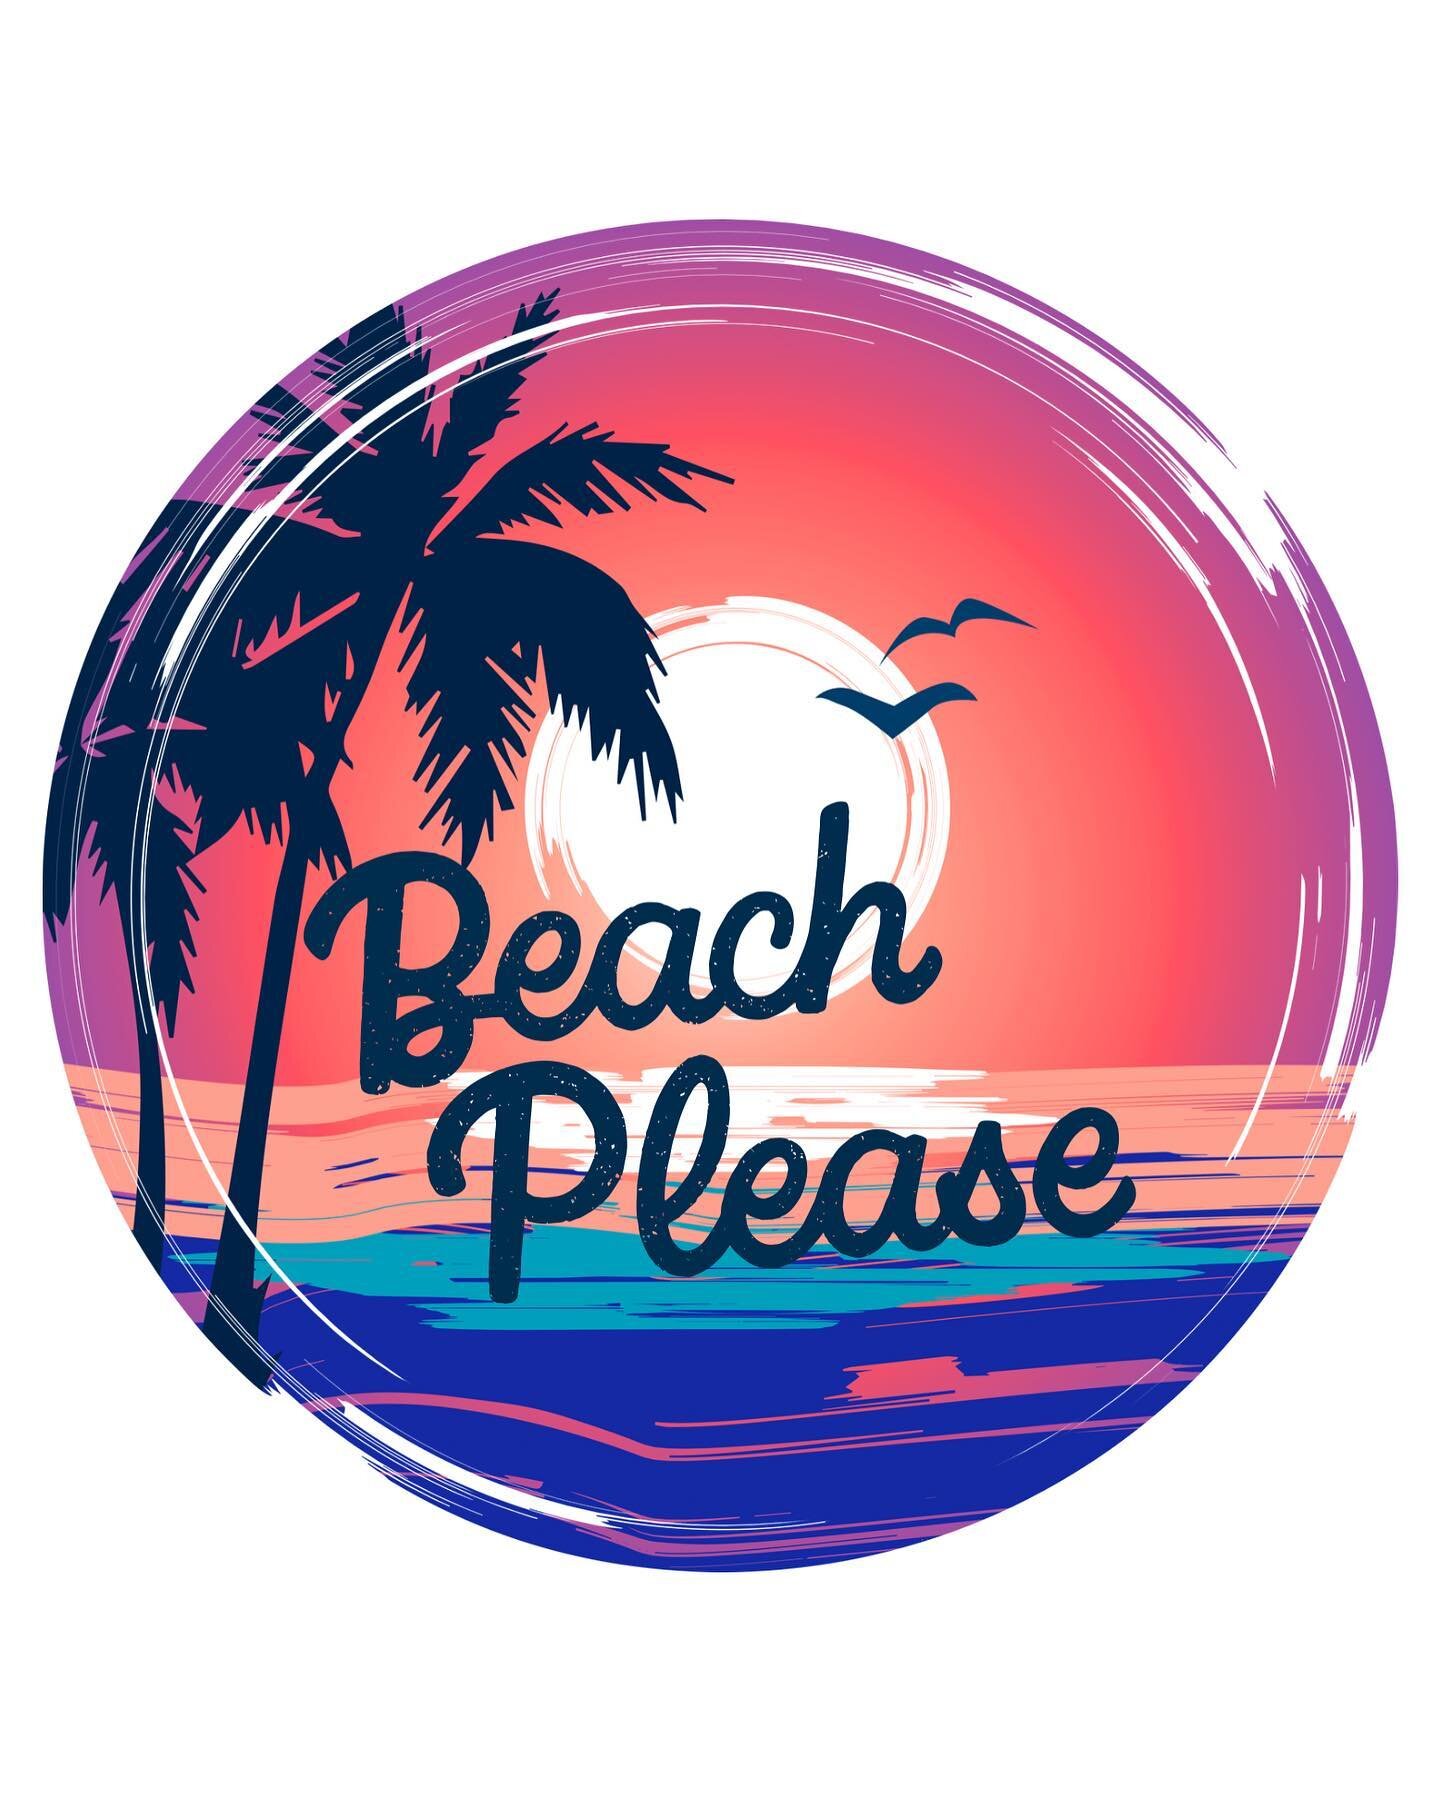 If you need a trip to the beach, check us out! Www.vacayescape.com #beach #beachlife #beachvibes #beachplease #beachgirl #myrtlebeach #myrtlebeachsc #myrtle #golf #golfseason #vacation #vacationrentalsbyowner #vacationmode #vacationvibes #sand #milit